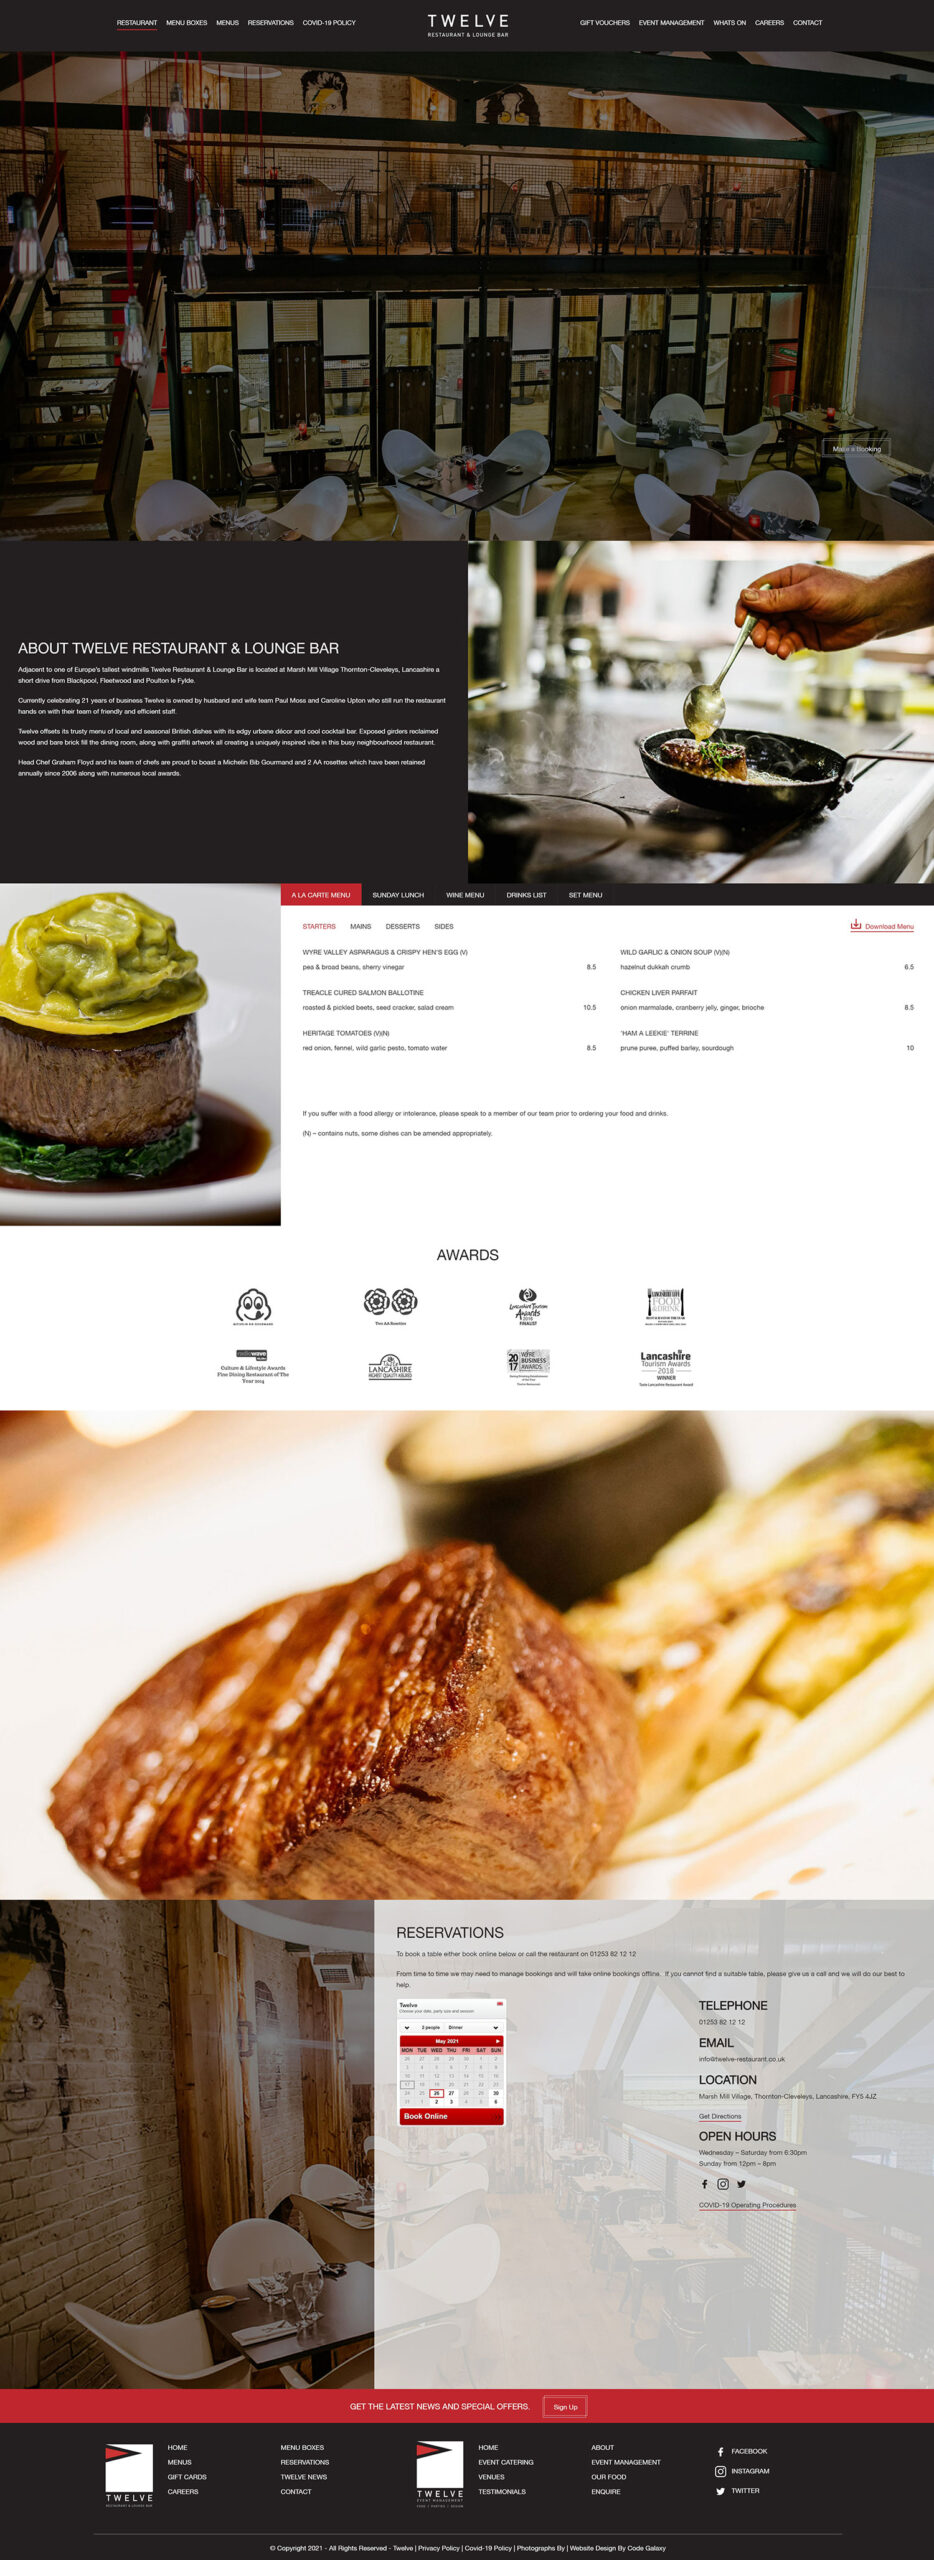 twleve restaurant bespoke website design